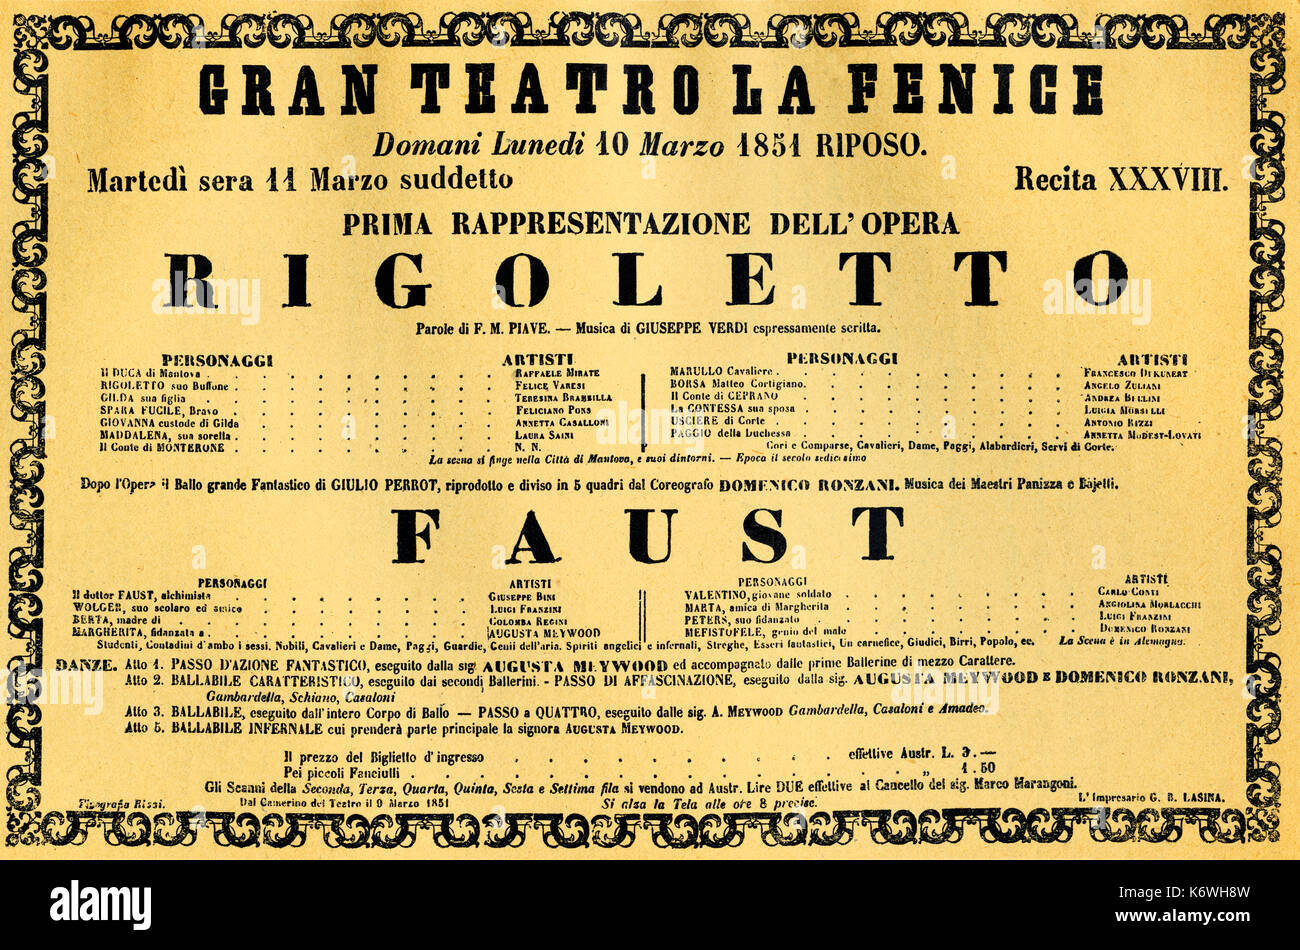 VERDI, Giuseppe - Rigoletto Premiere 11. März Plakat 1851 für La Fenice in Venedig. Italienischer Komponist (1813-1901) Buch: Verdi-e La Fenice, PG32 Stockfoto